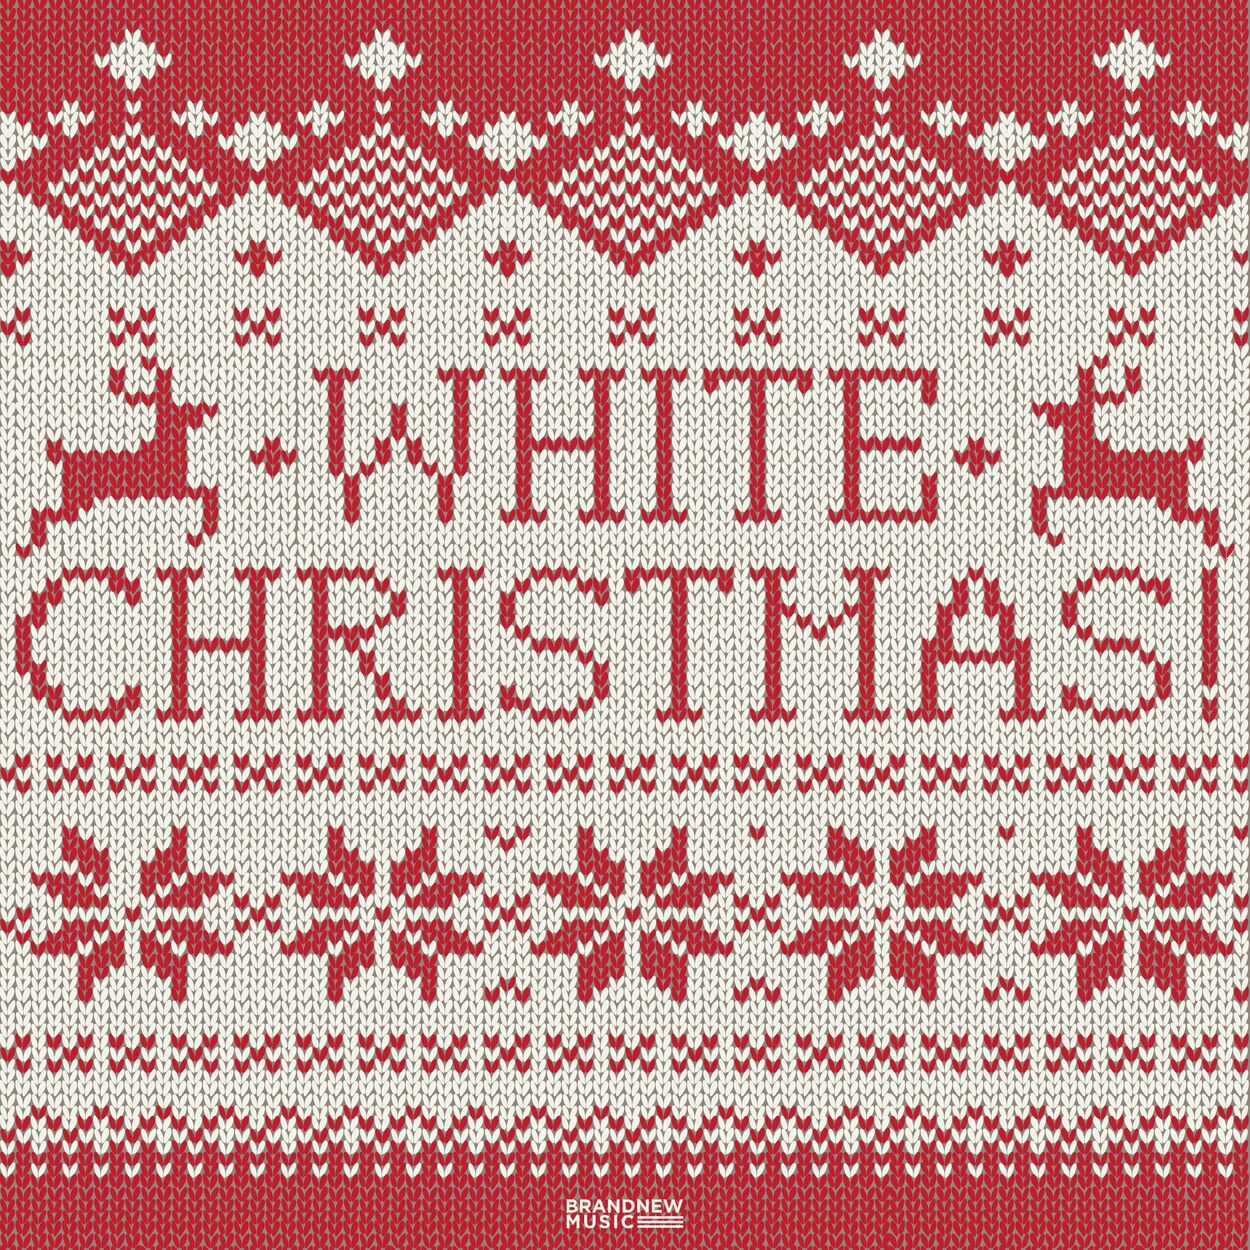 BUMKEY, Muzie, Yang Da Il, Vincent Blue, JEON WOONG, LEE DAE HWI, EUNHO, EUNSANG – BRANDNEW YEAR 2023 ‘White Christmas’ – Single